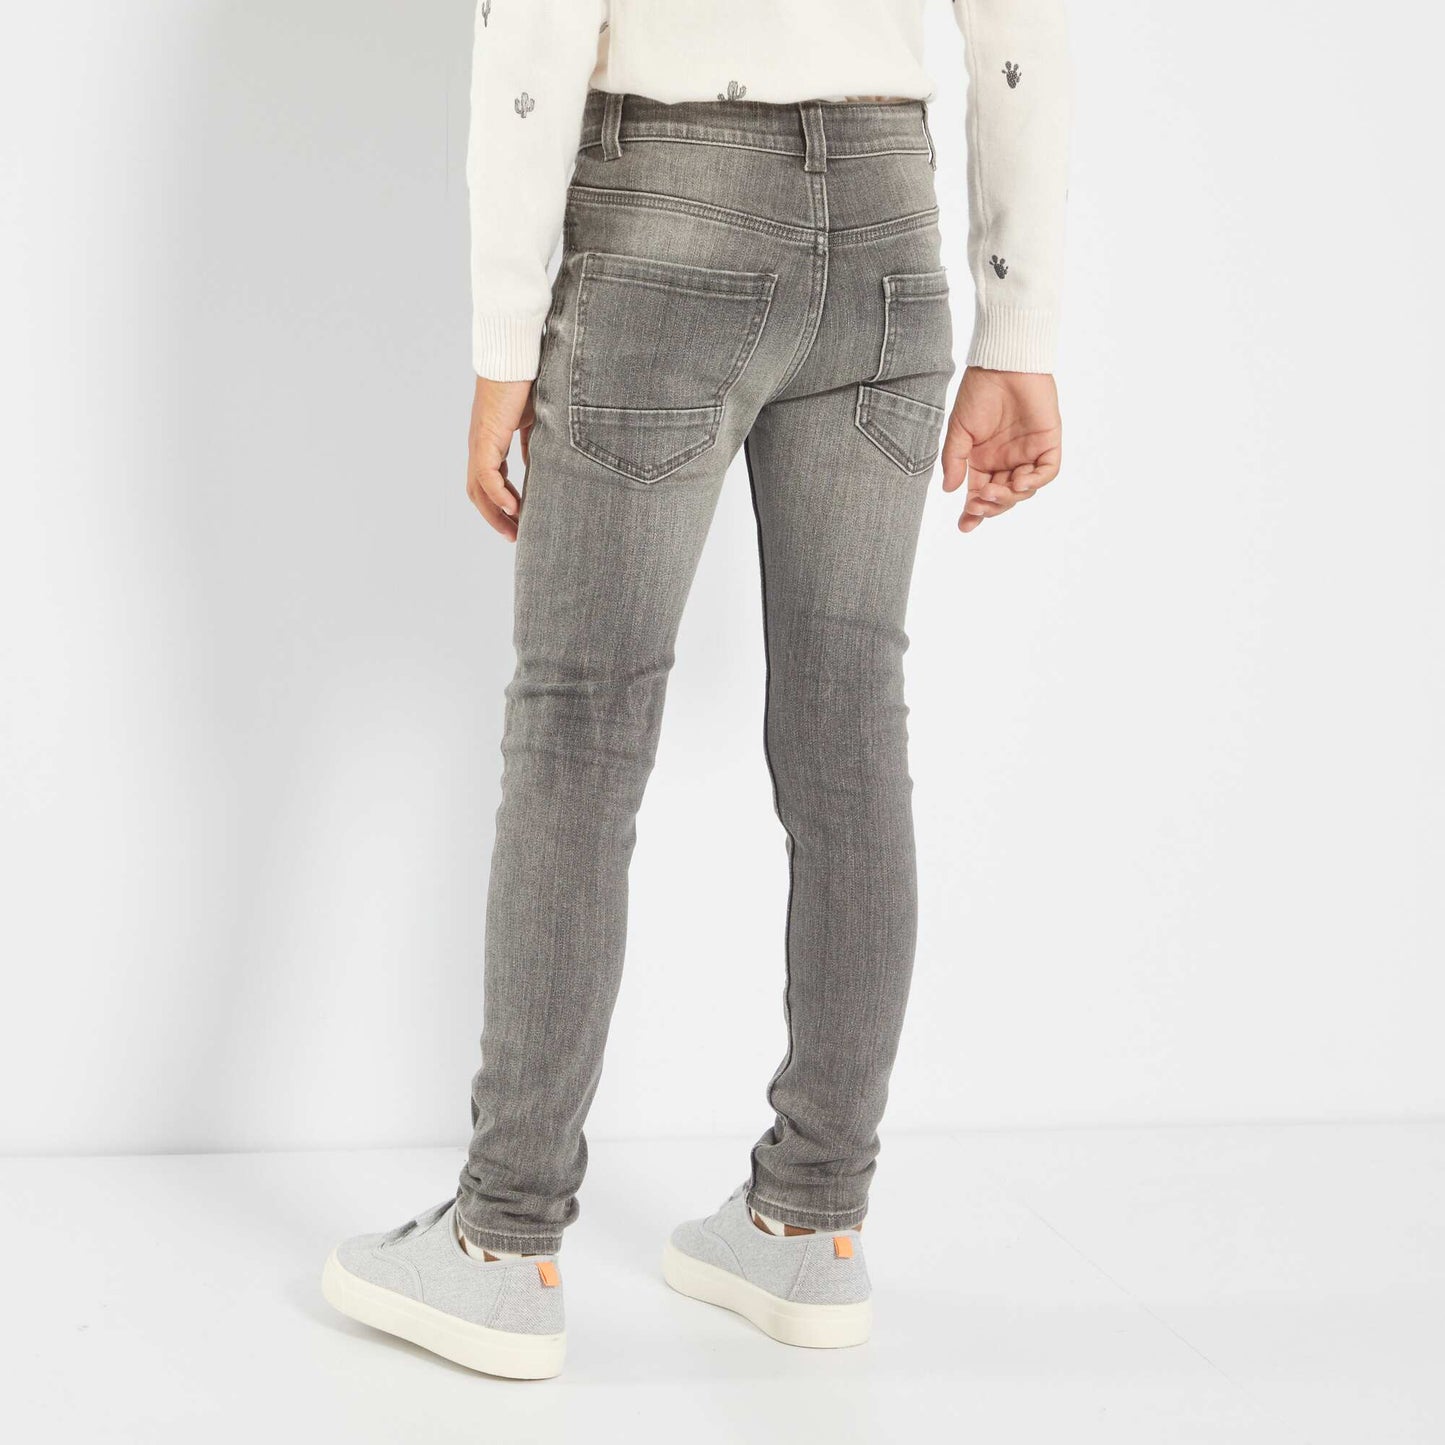 Skinny jeans grey denim